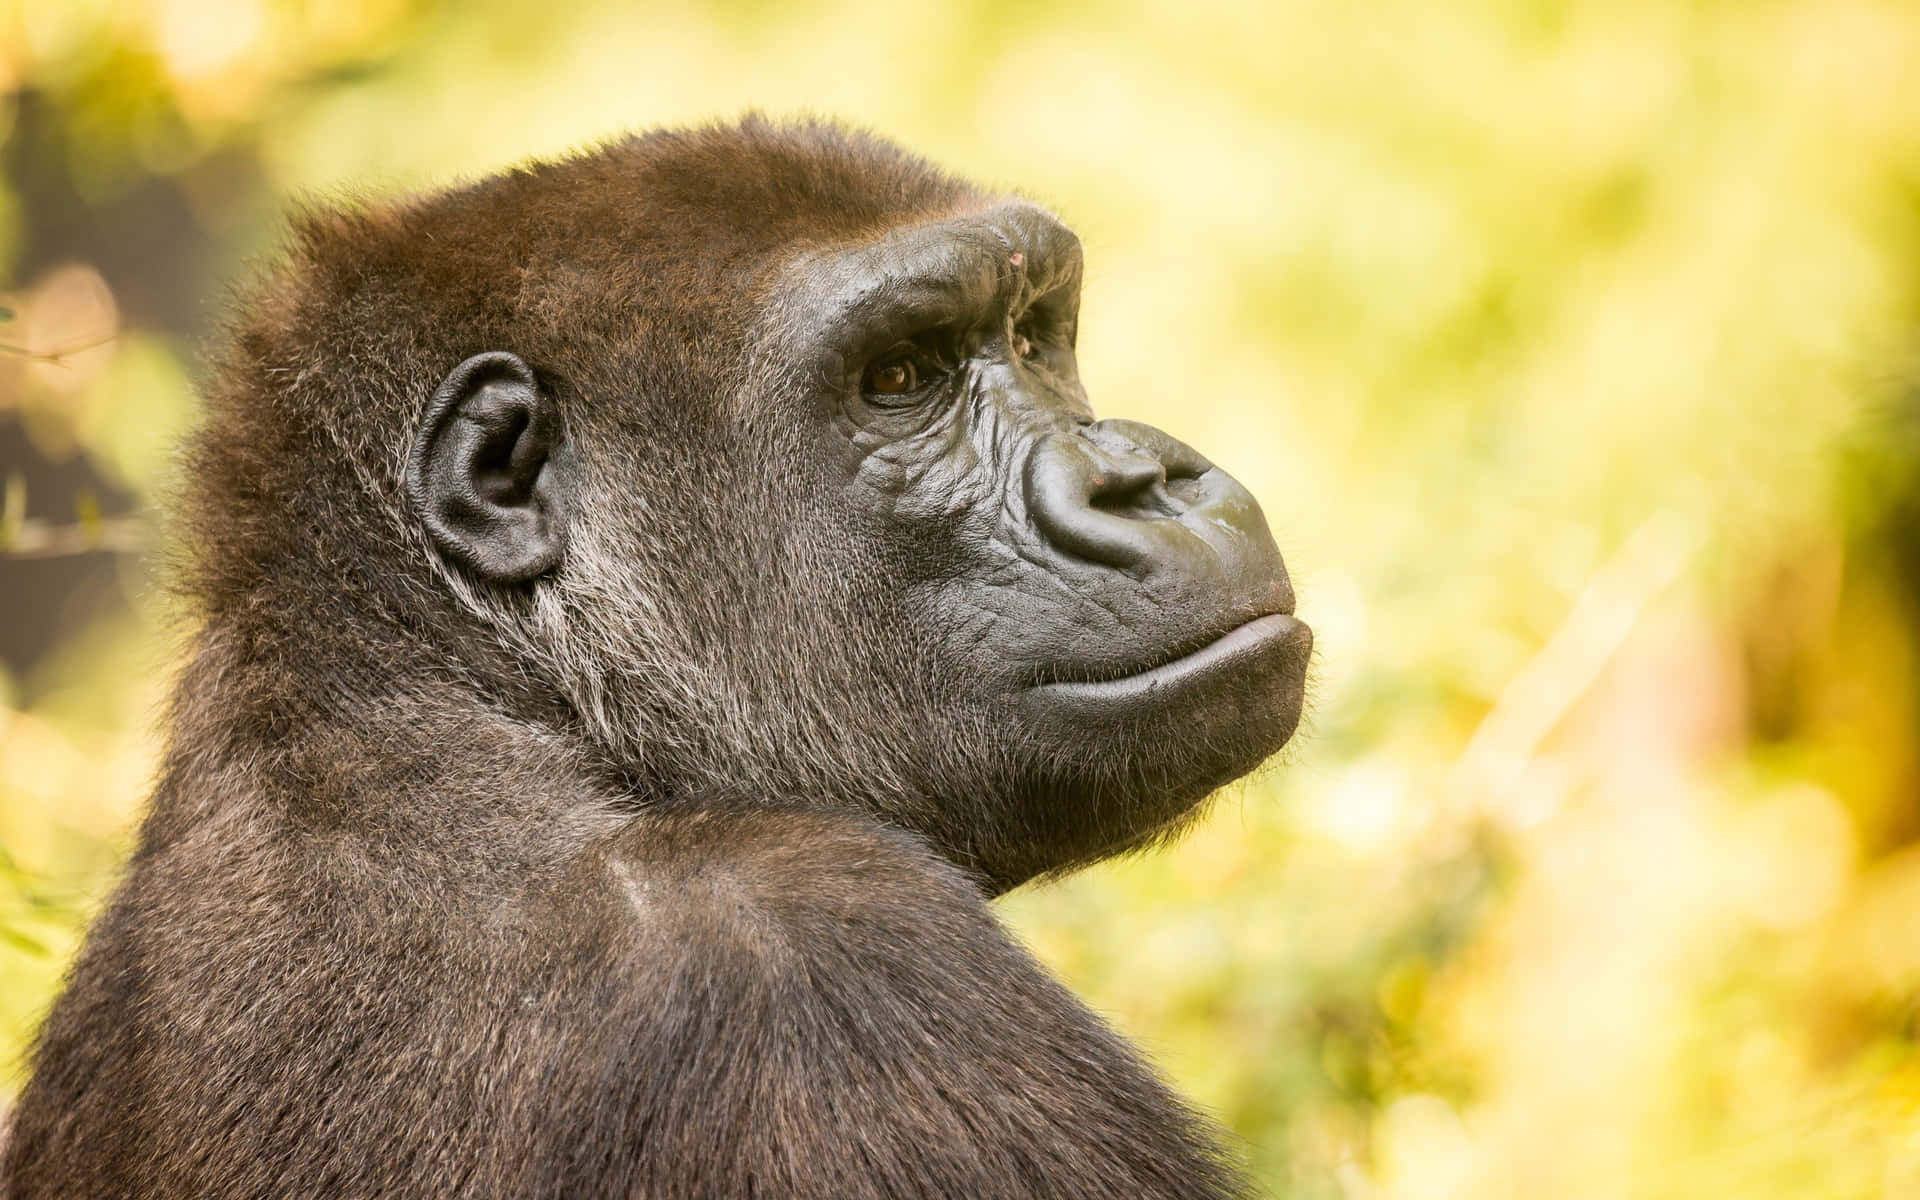 Mejorfondo De Pantalla De Un Gorila Con Pelaje Marrón Oscuro